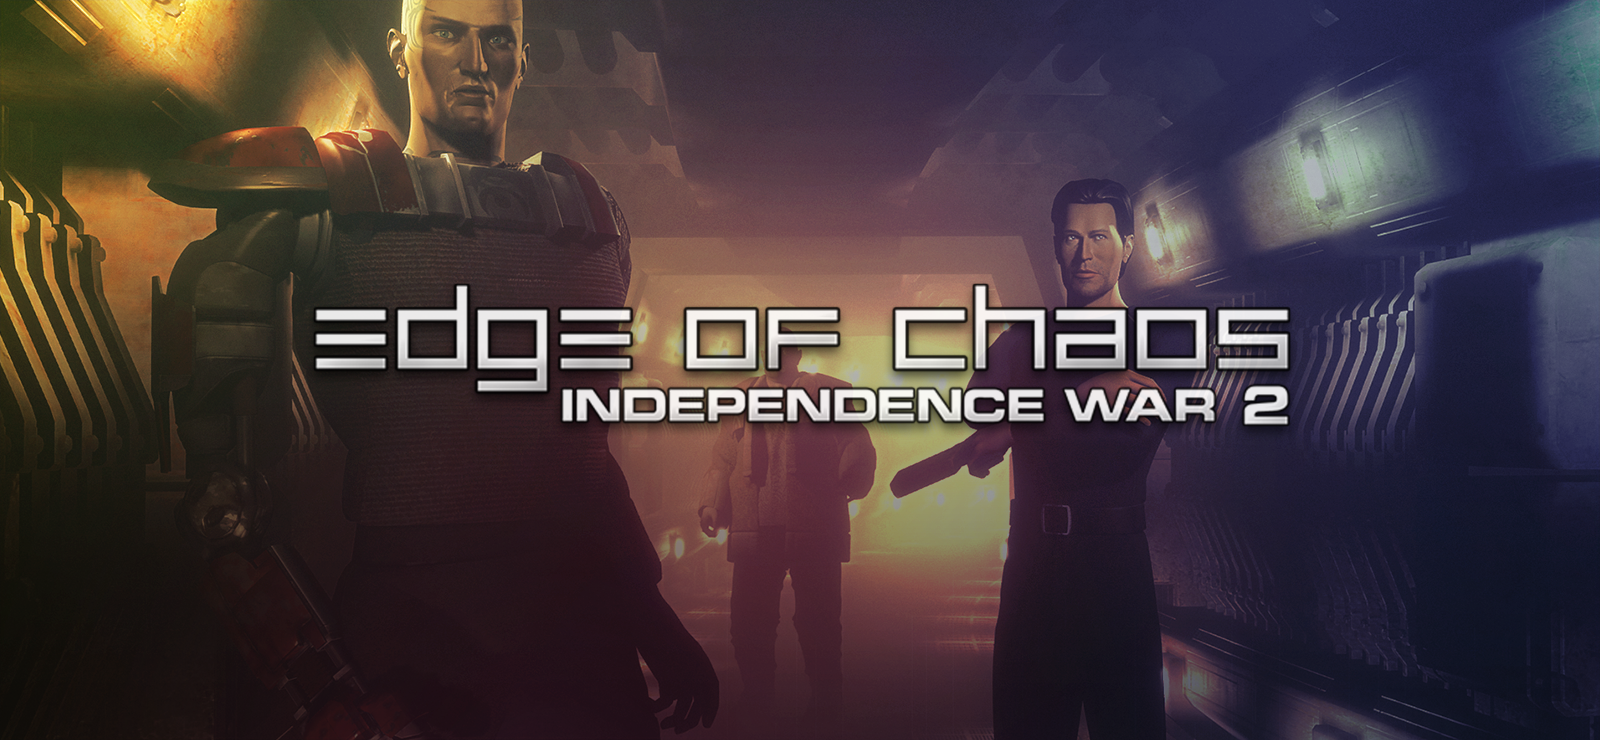 Independence War™ II: Edge Of Chaos